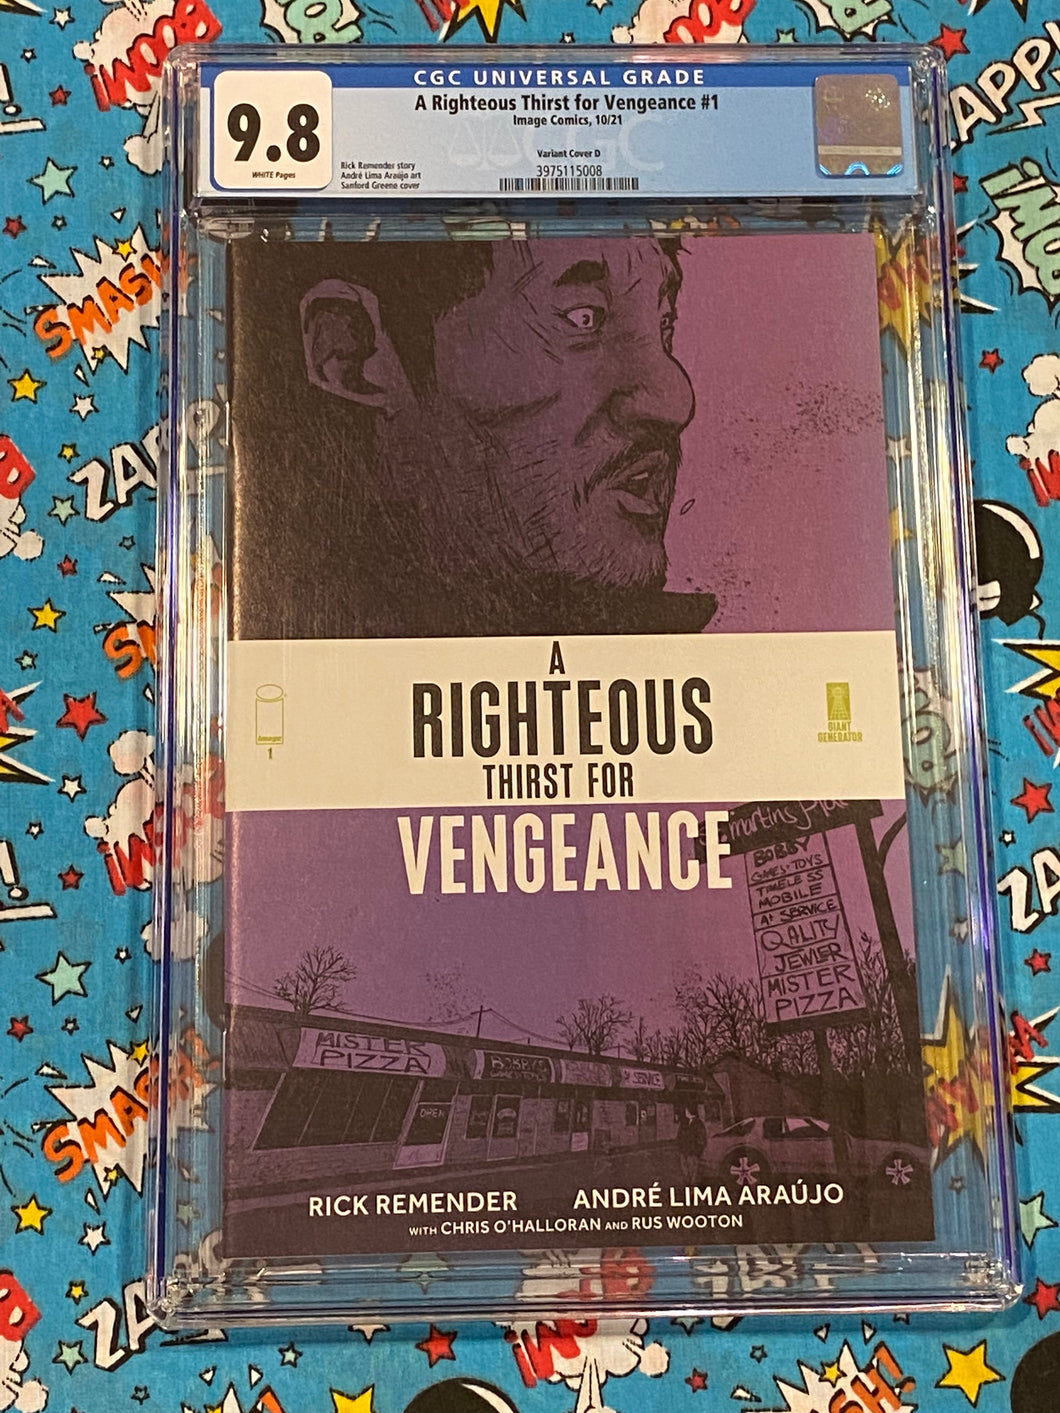 CGC 9.8 - A Righteous Thirst For Vengeance #1 - Sanford Greene 1:10 Variant